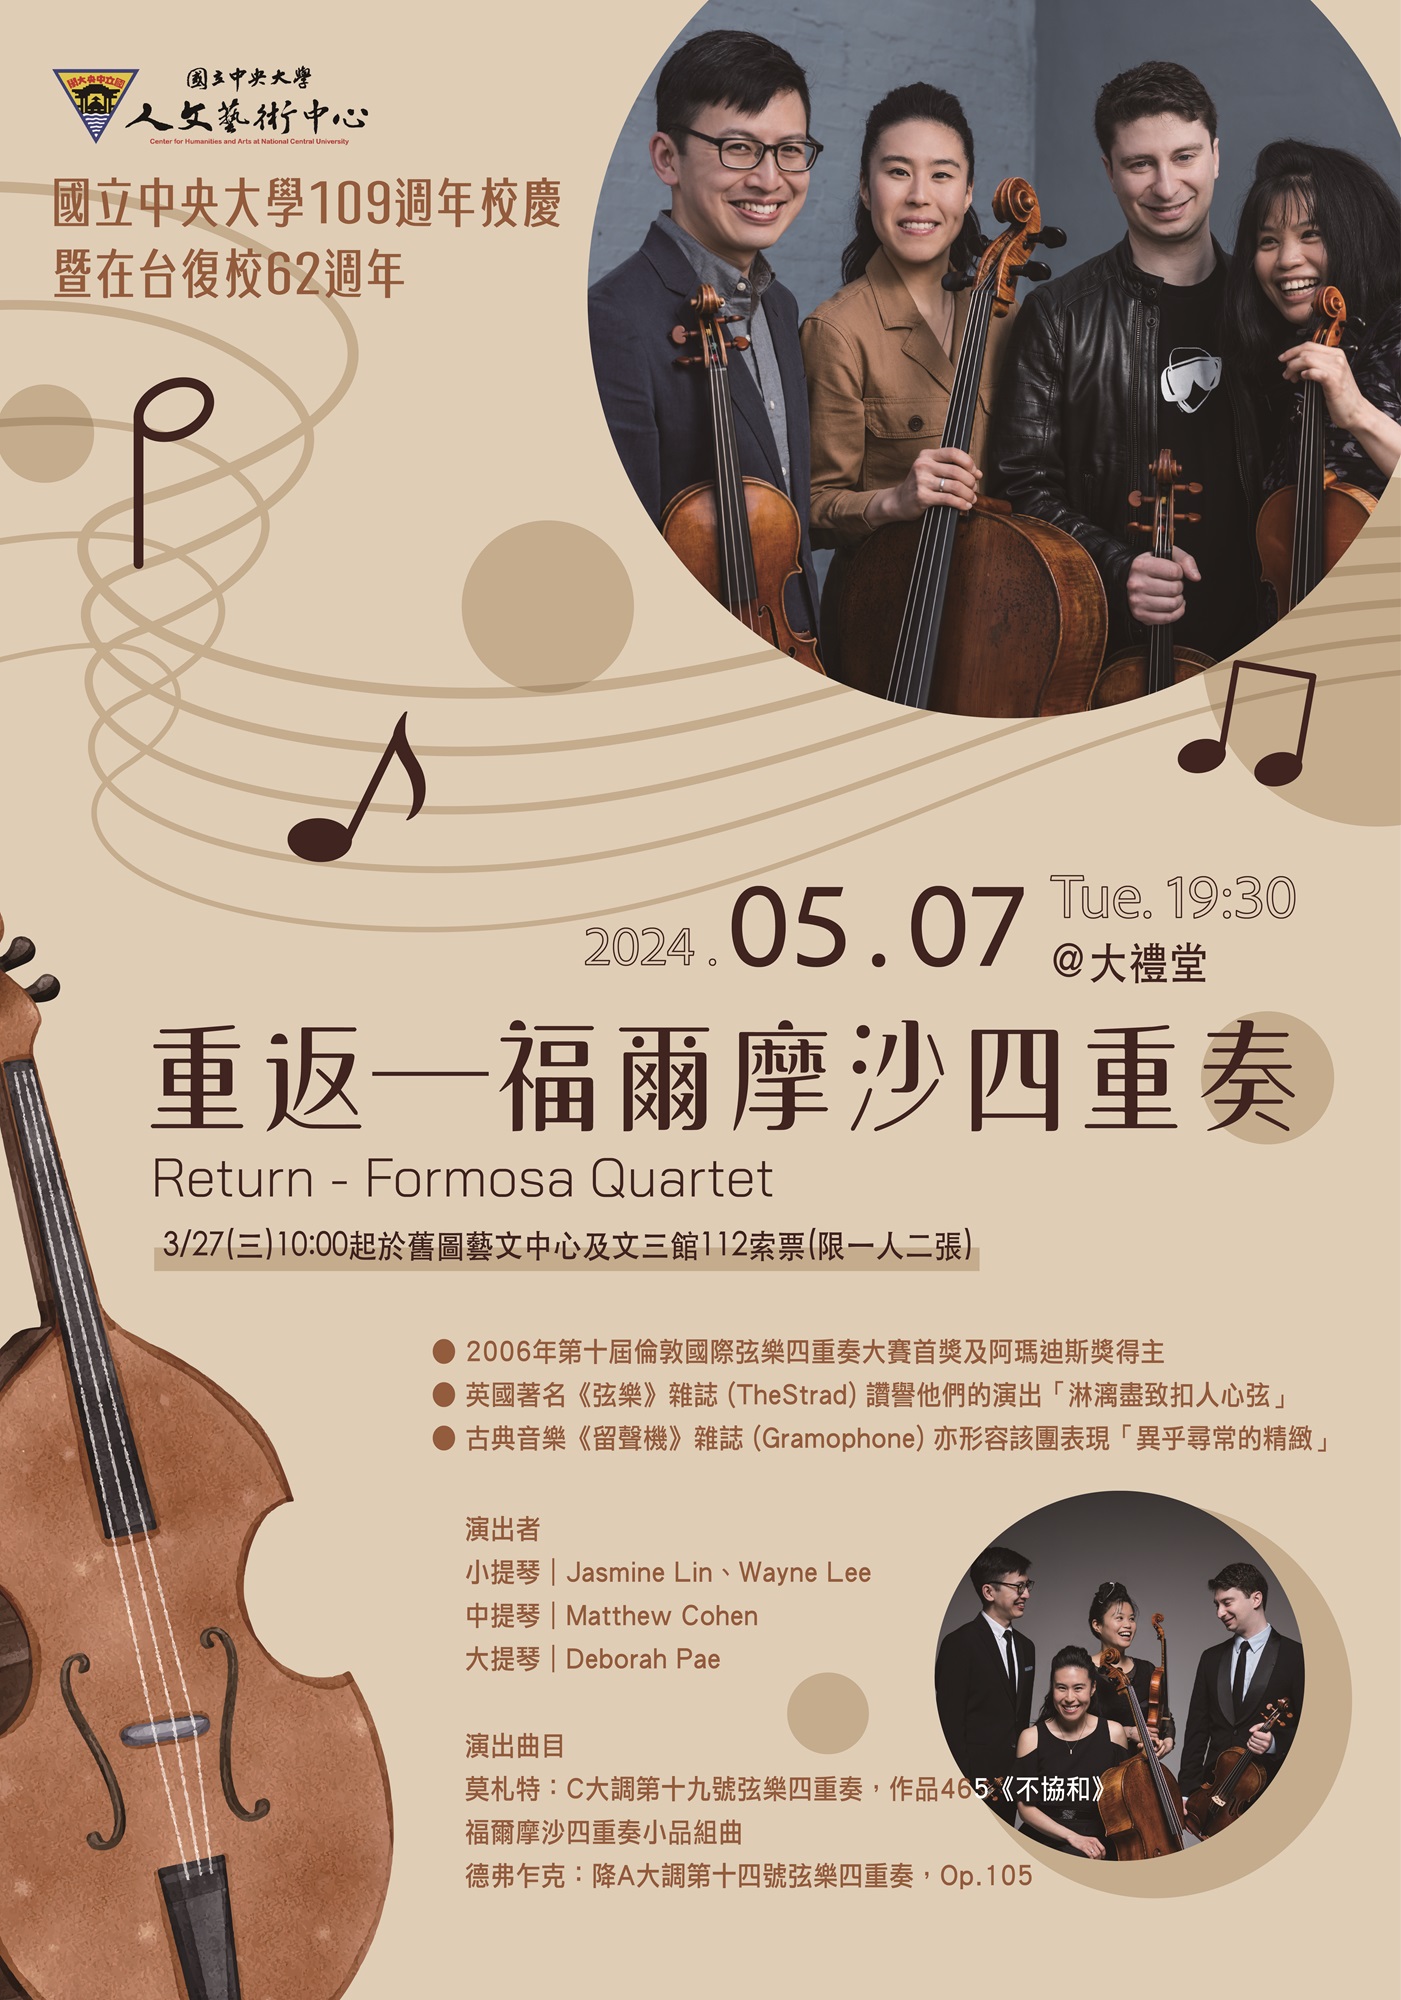 NCU 109th Anniversary : Return - Formosa Quartet